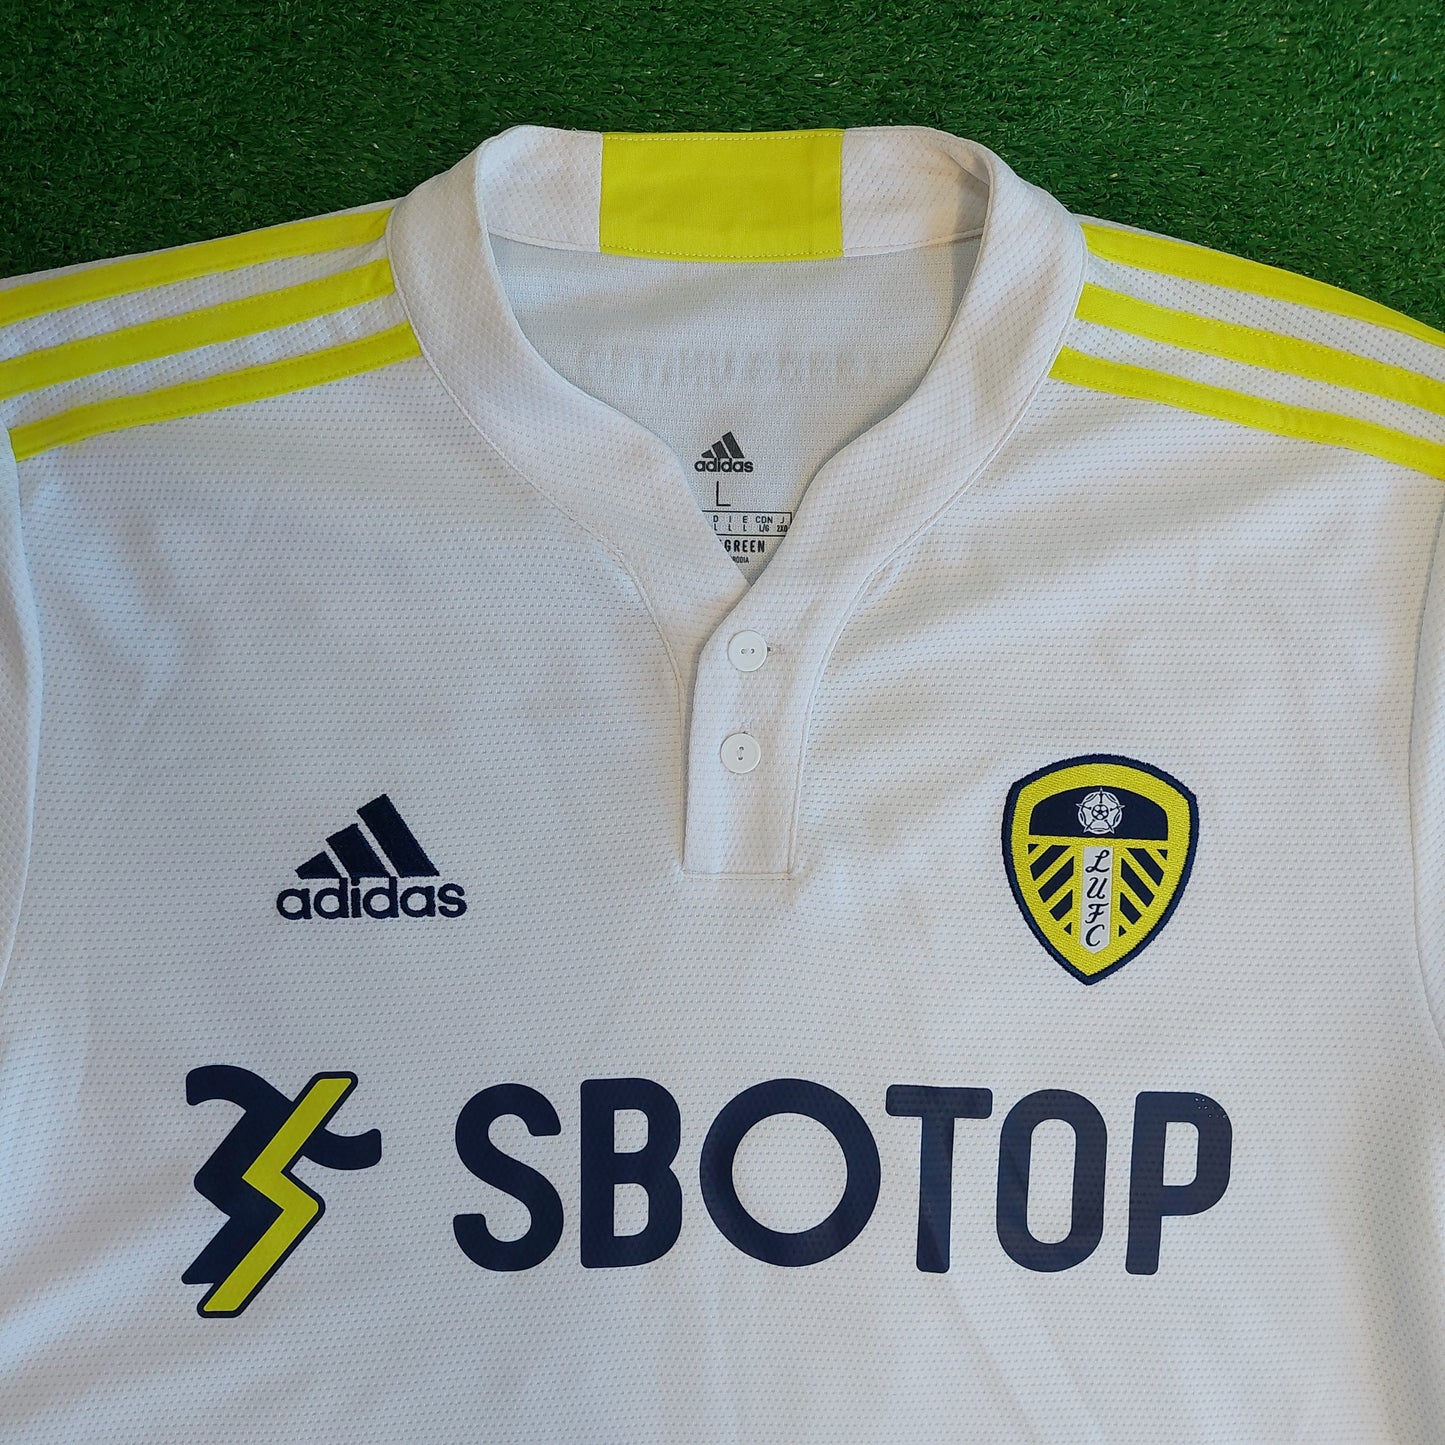 Leeds United 2021/22 Home Shirt (Excellent) - Size L